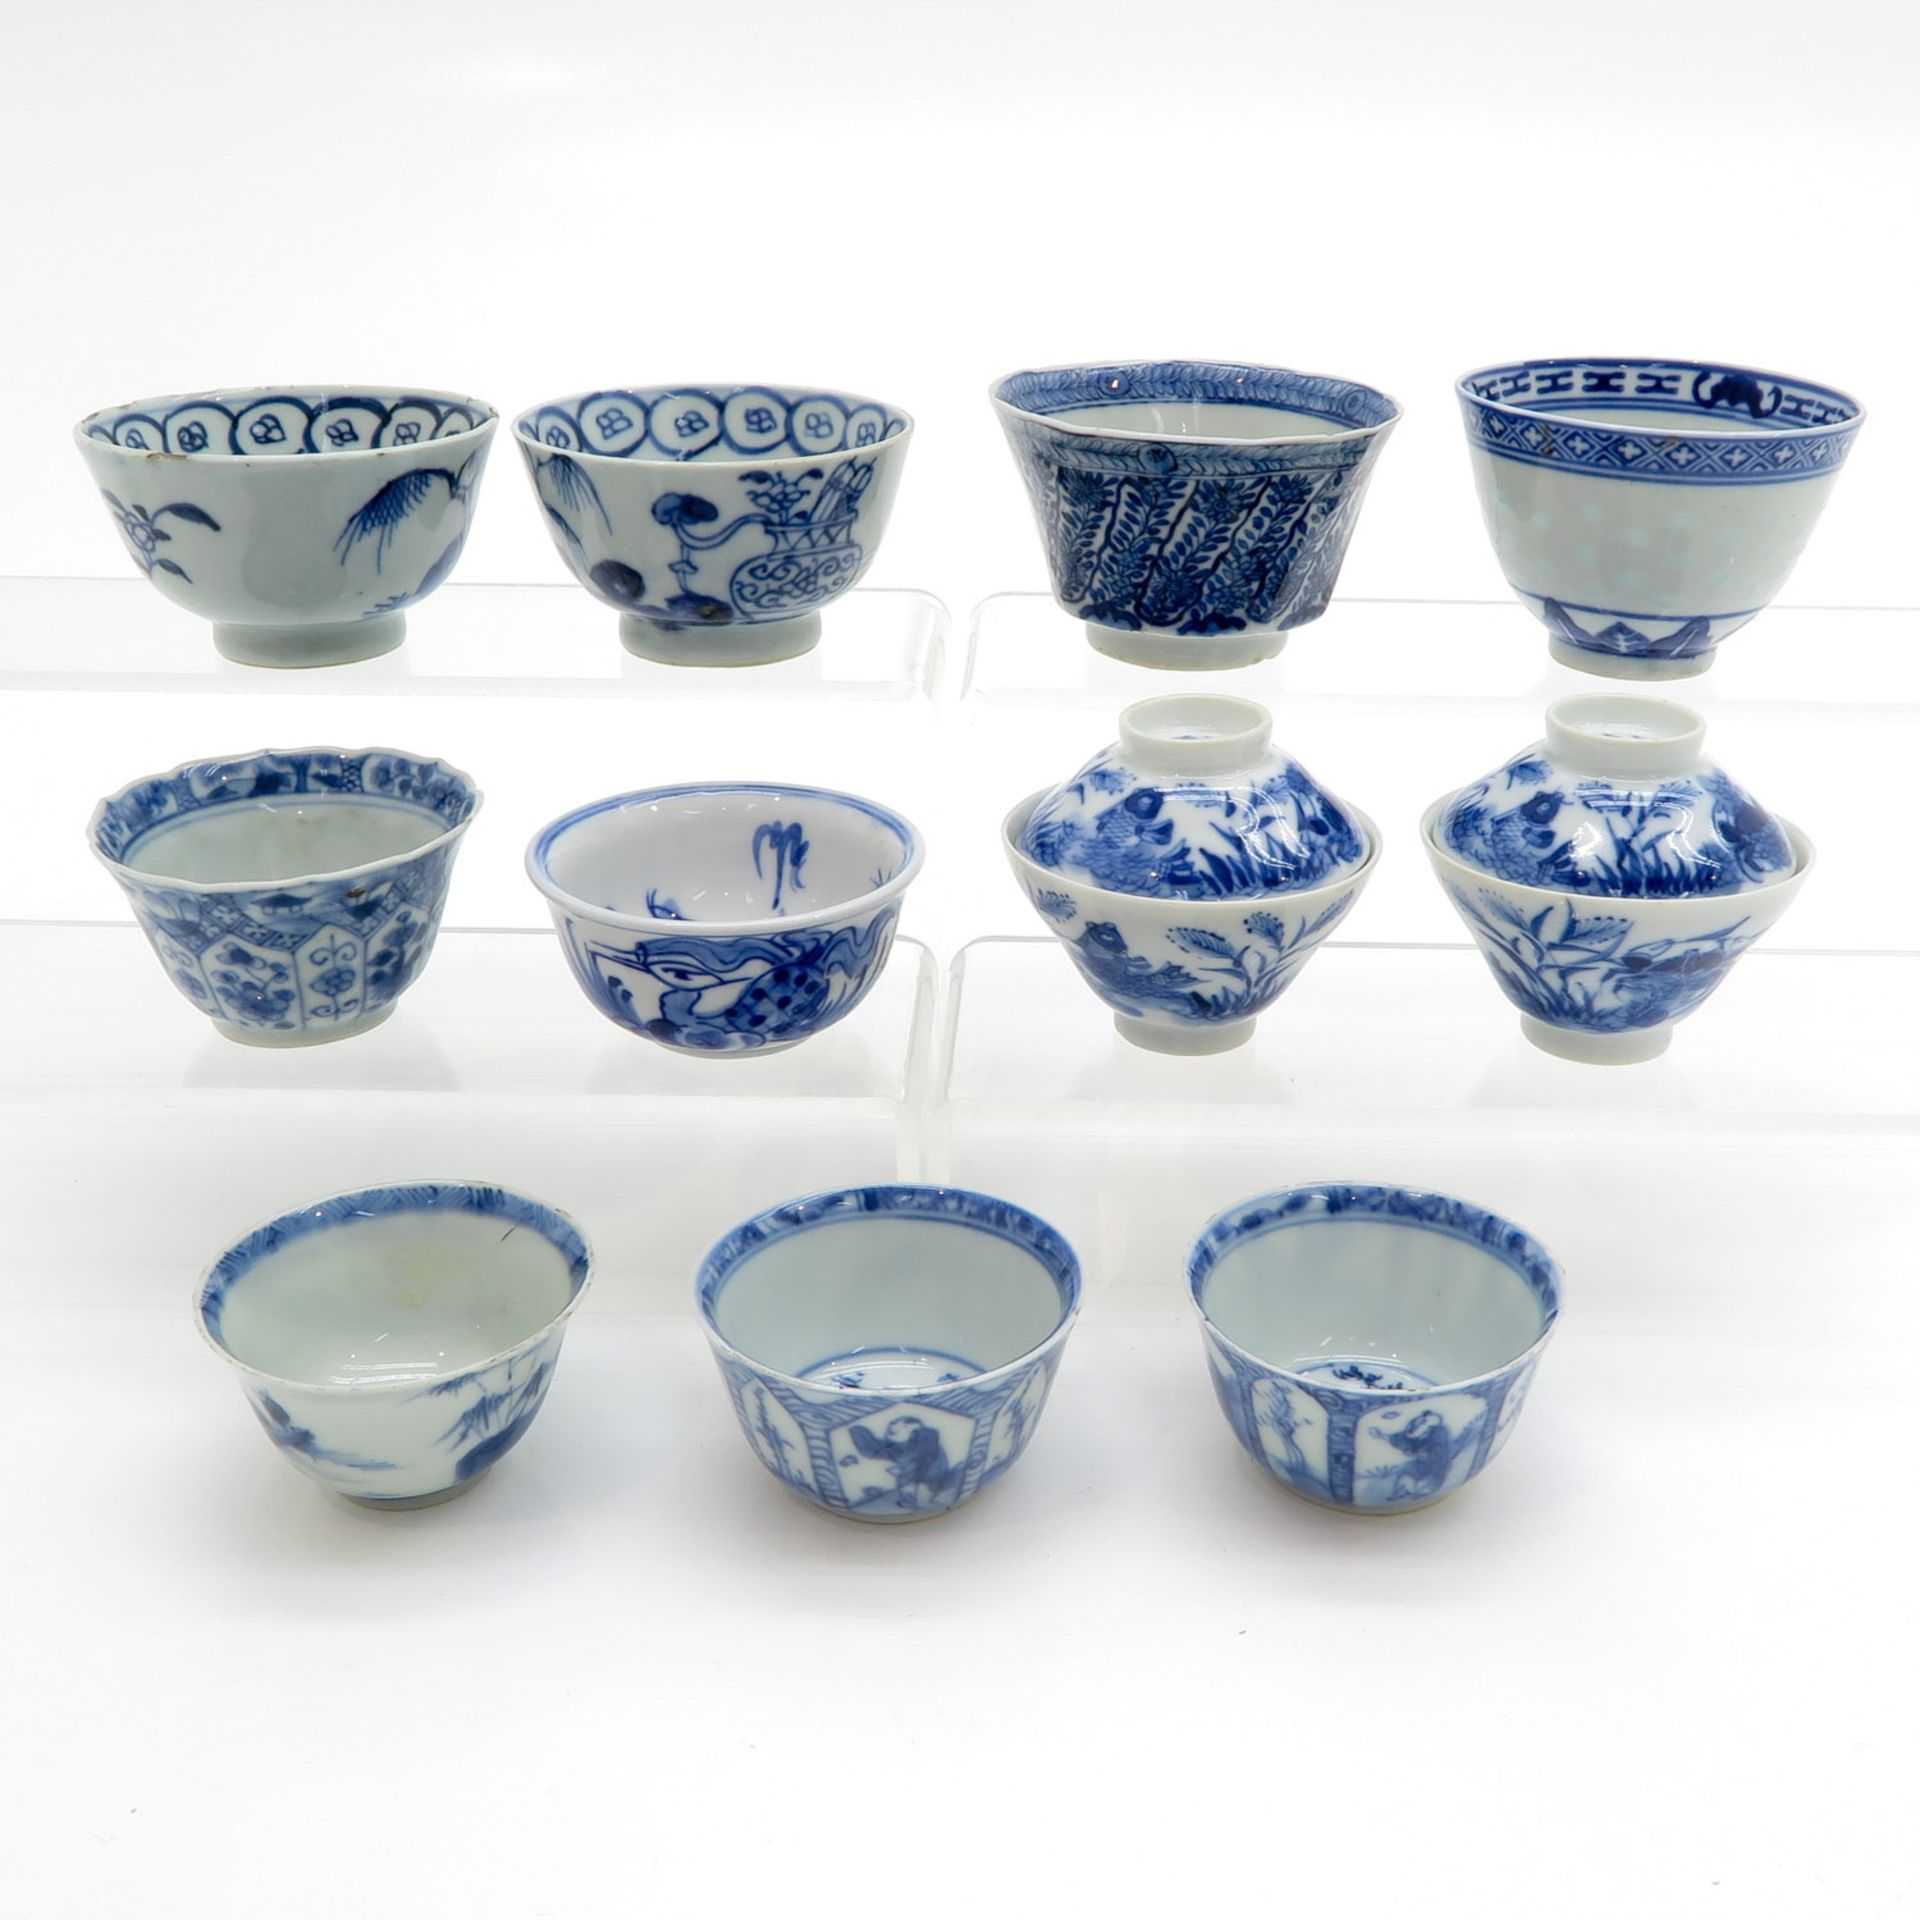 Lot of 13 China Porcelain Small Bowls